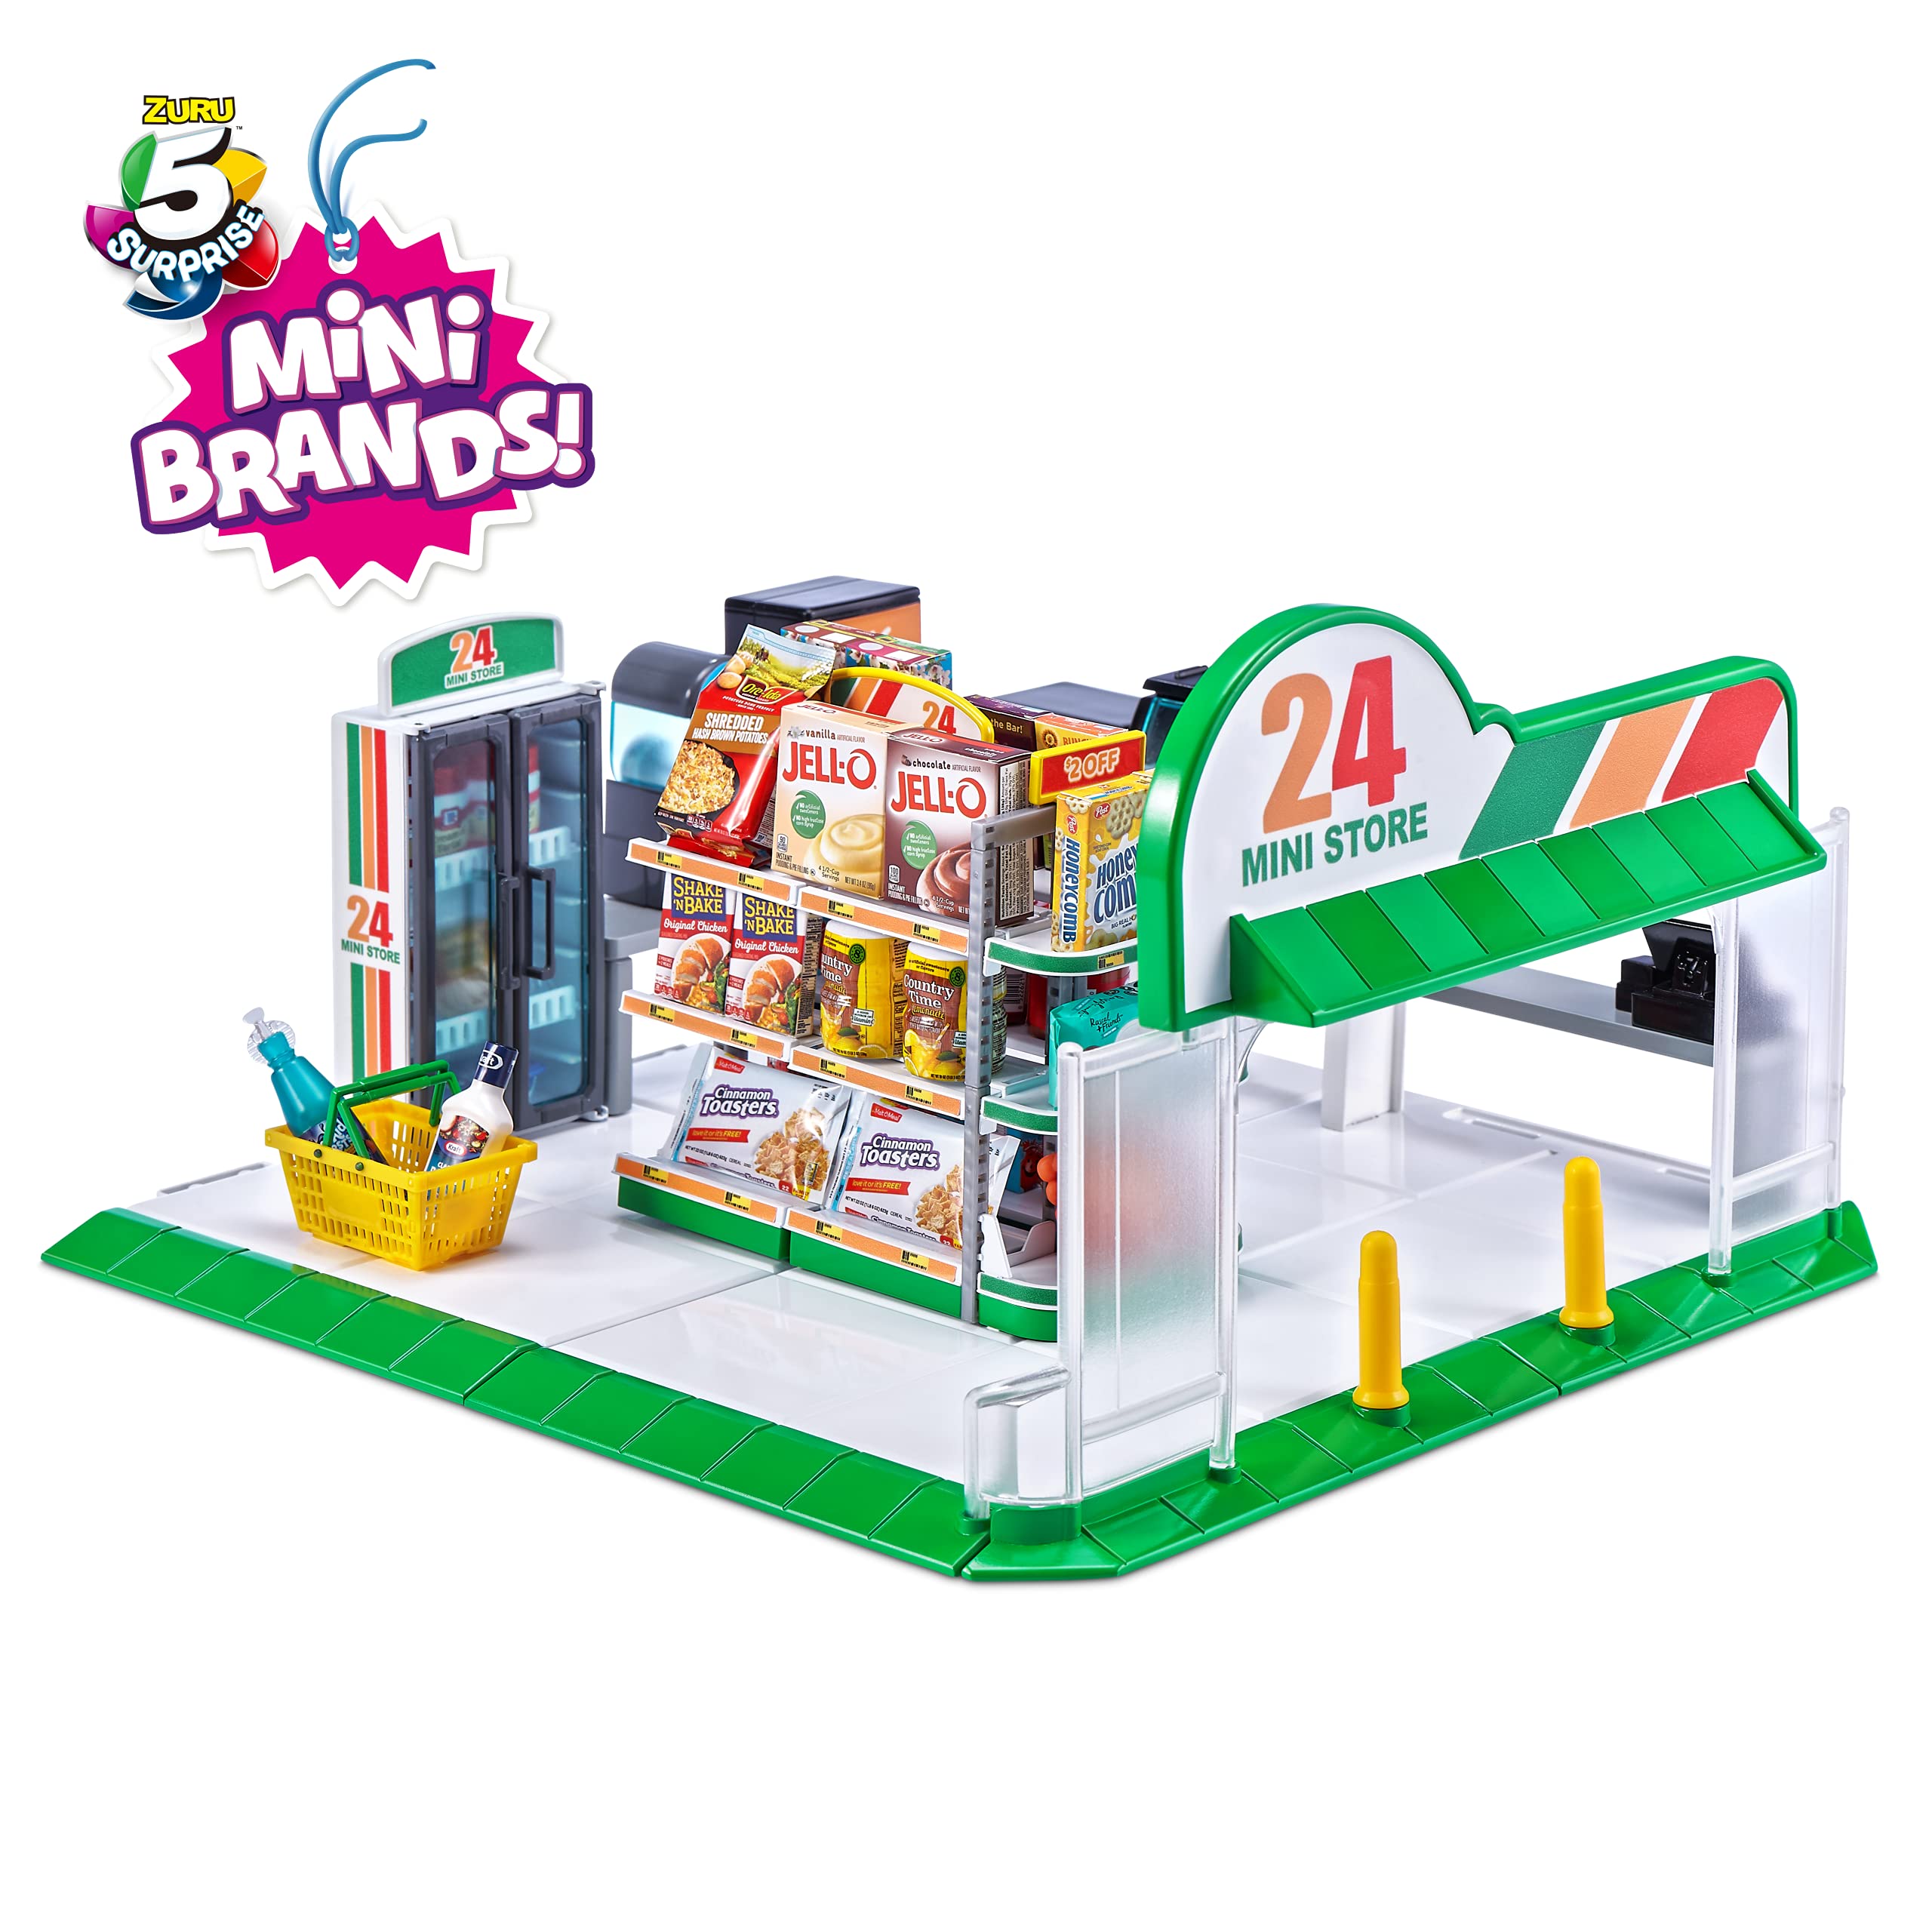 5 Surprise Mini Brands Mini Convenience Store Playset with 1 Exclusive Mini by ZURU, Multicolor